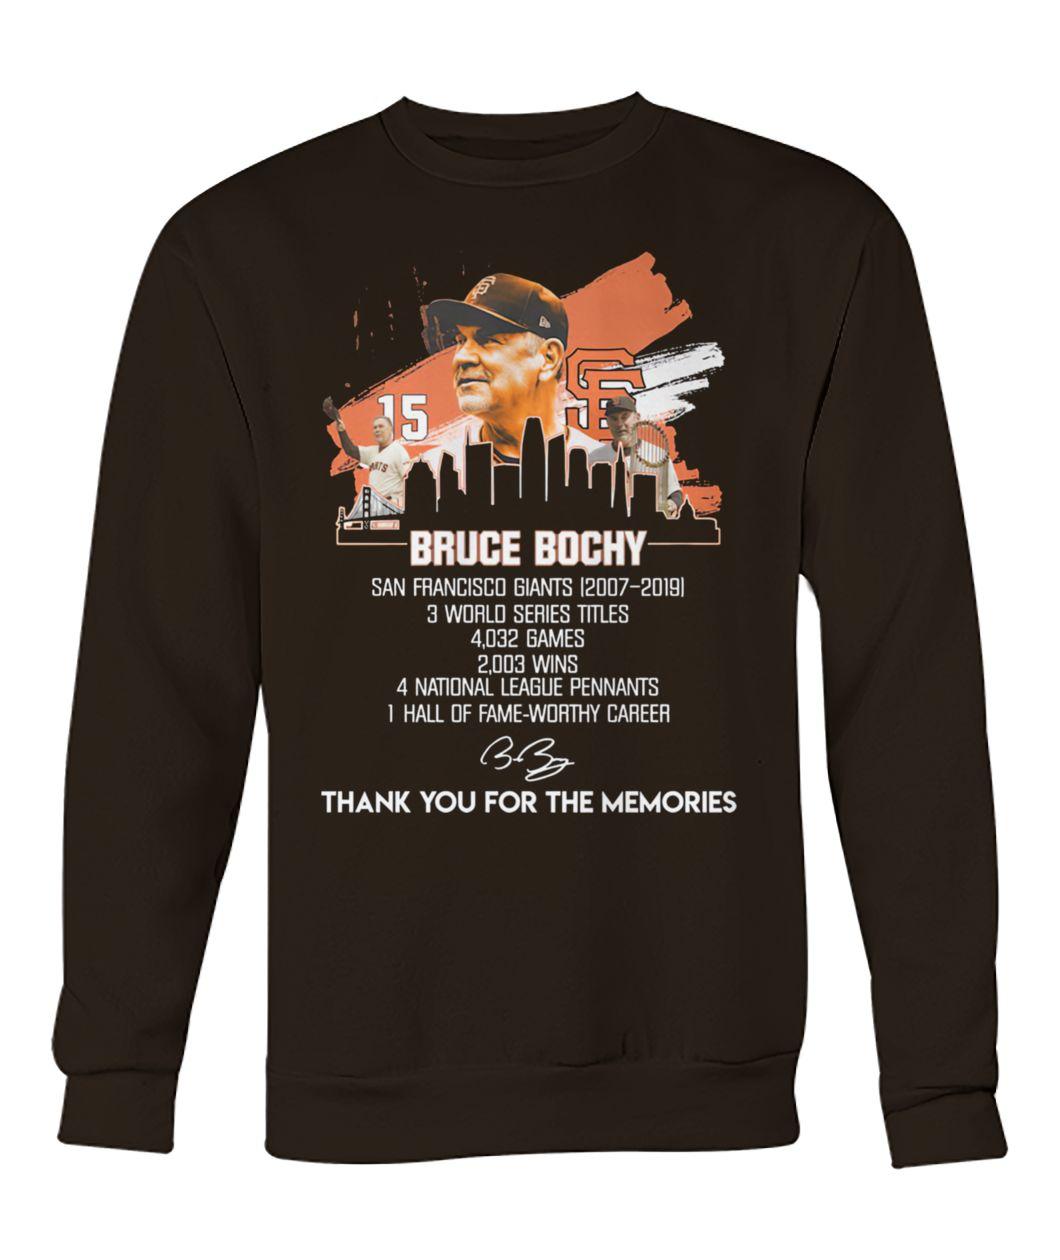 Bruce bochy san francisco giants 2007-2019 thank you for the memories sweatshirt